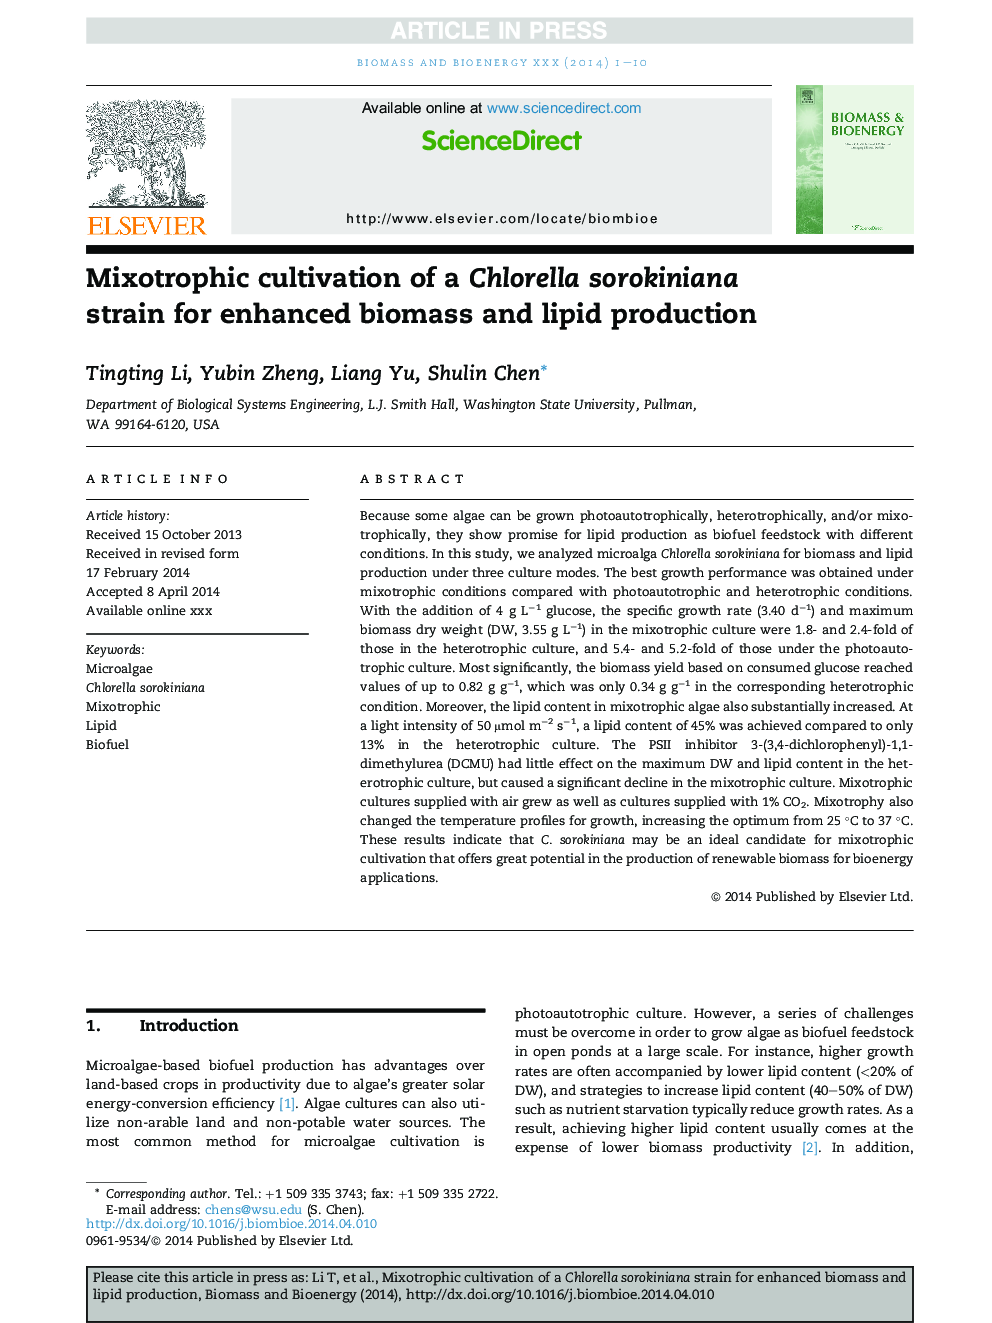 Mixotrophic cultivation of a Chlorella sorokiniana strain for enhanced biomass and lipid production